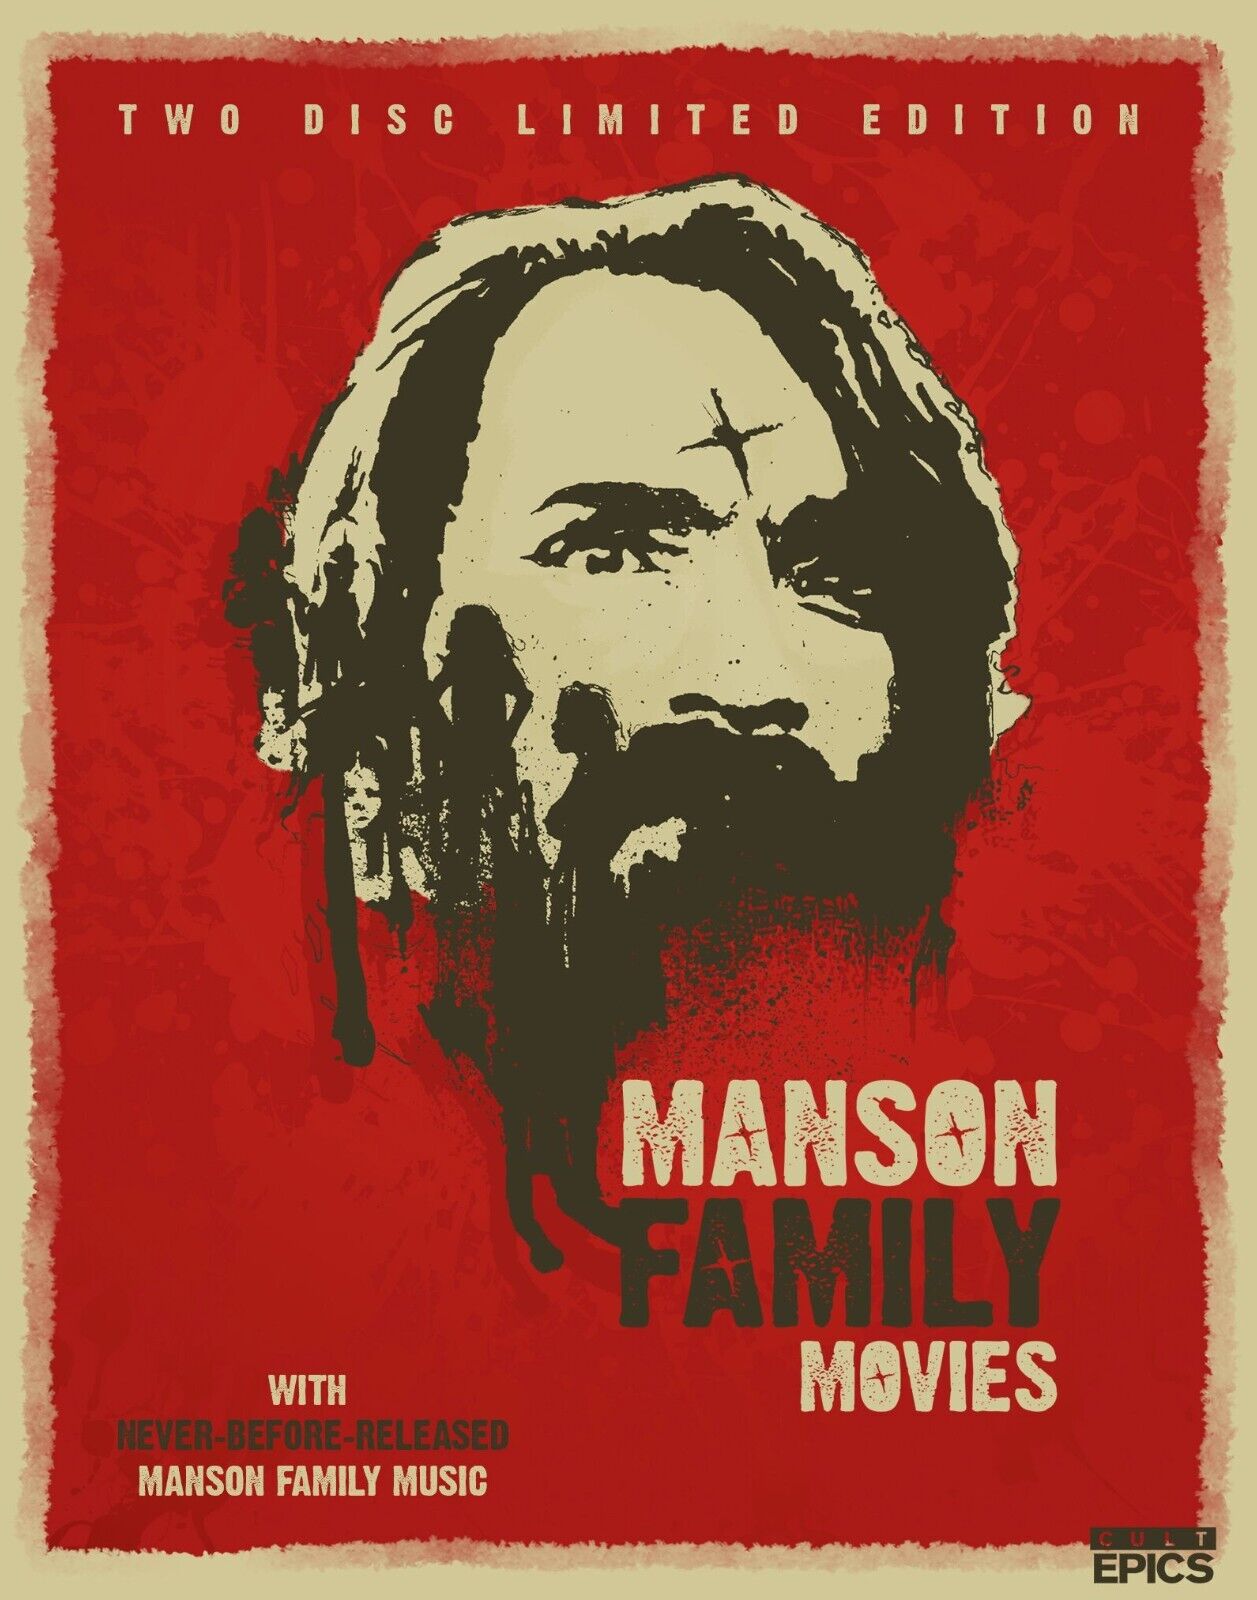 Manson Family Movies (DVD, 1984)